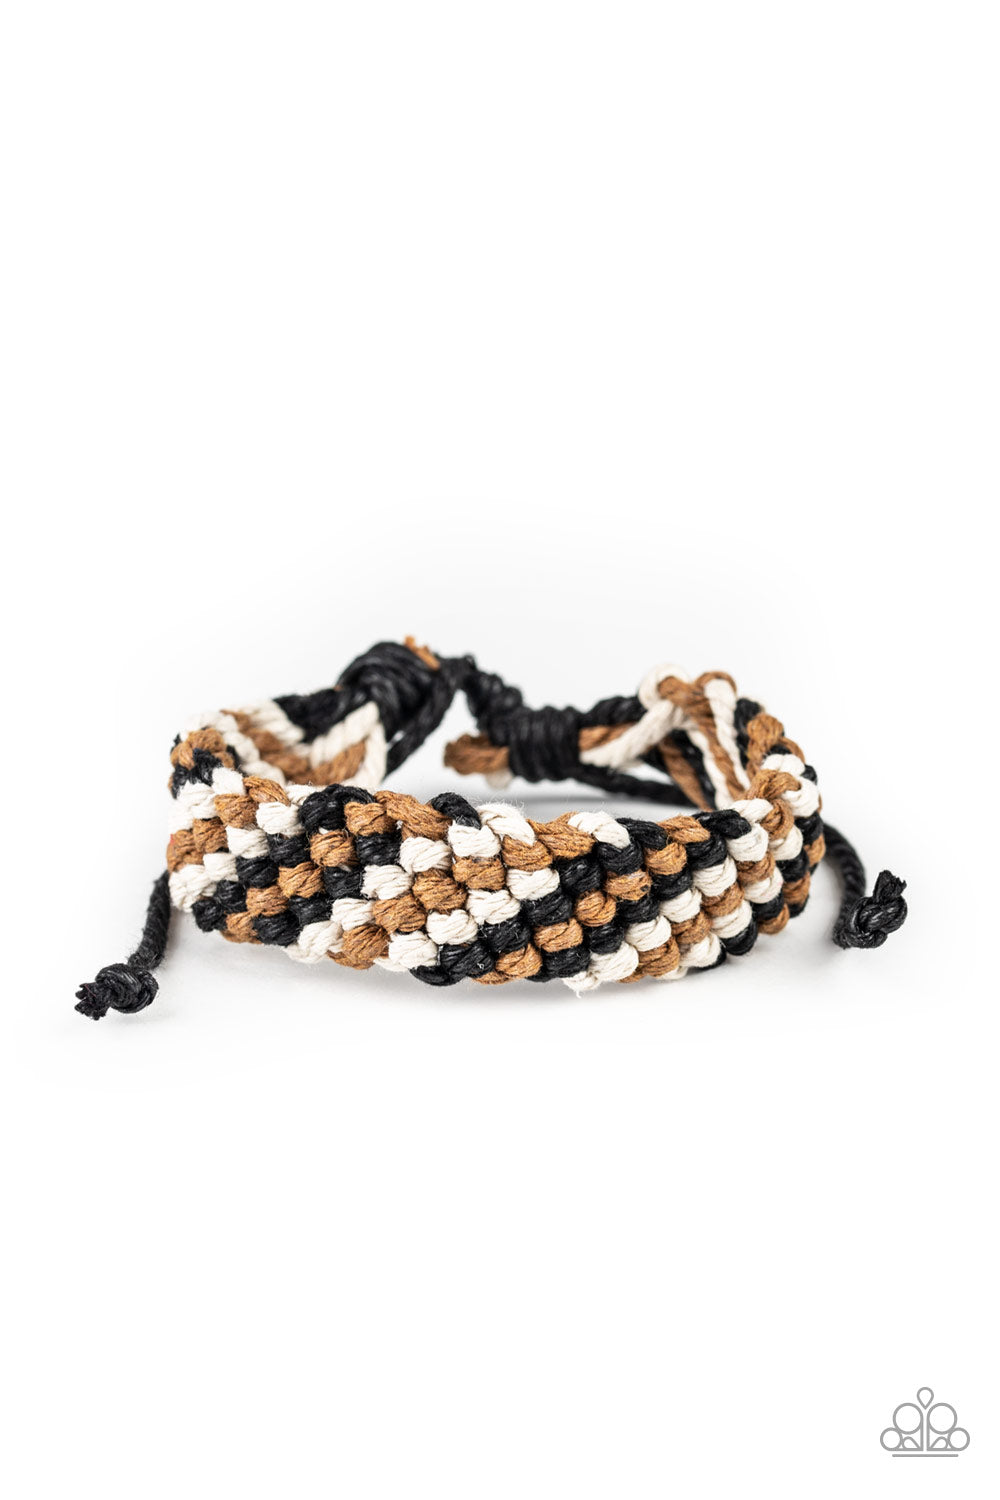 Paparazzi WEAVE No Trace - Black - Brown and White Braid - Sliding Knot Bracelet - $5 Jewelry with Ashley Swint